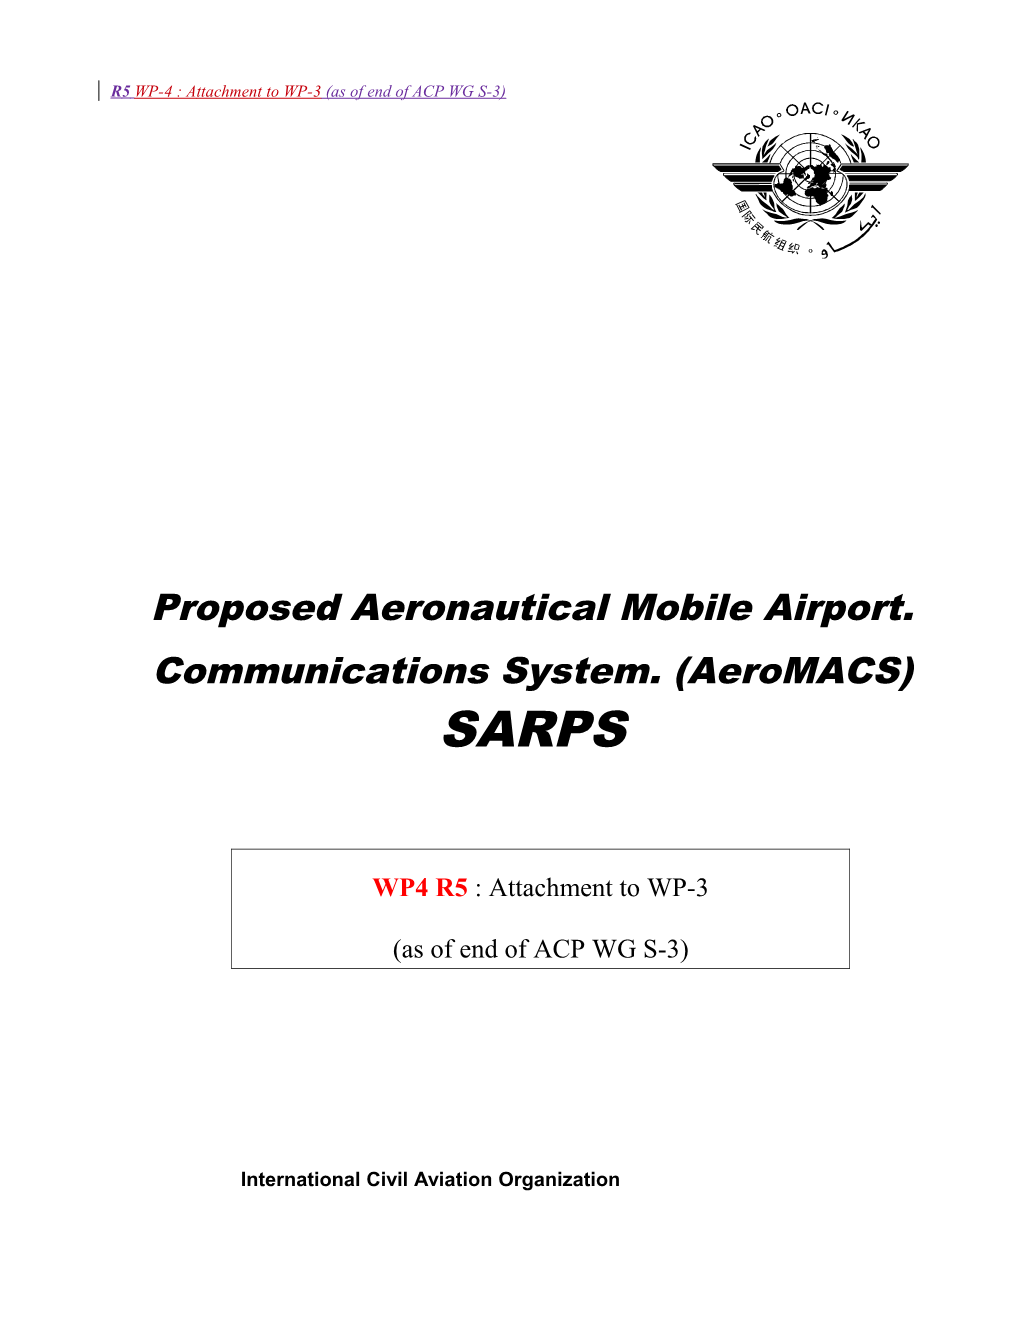 Draft Aeromacs SARPS-Track Change Veriosn(ACP WG S/3 WP04 R5)